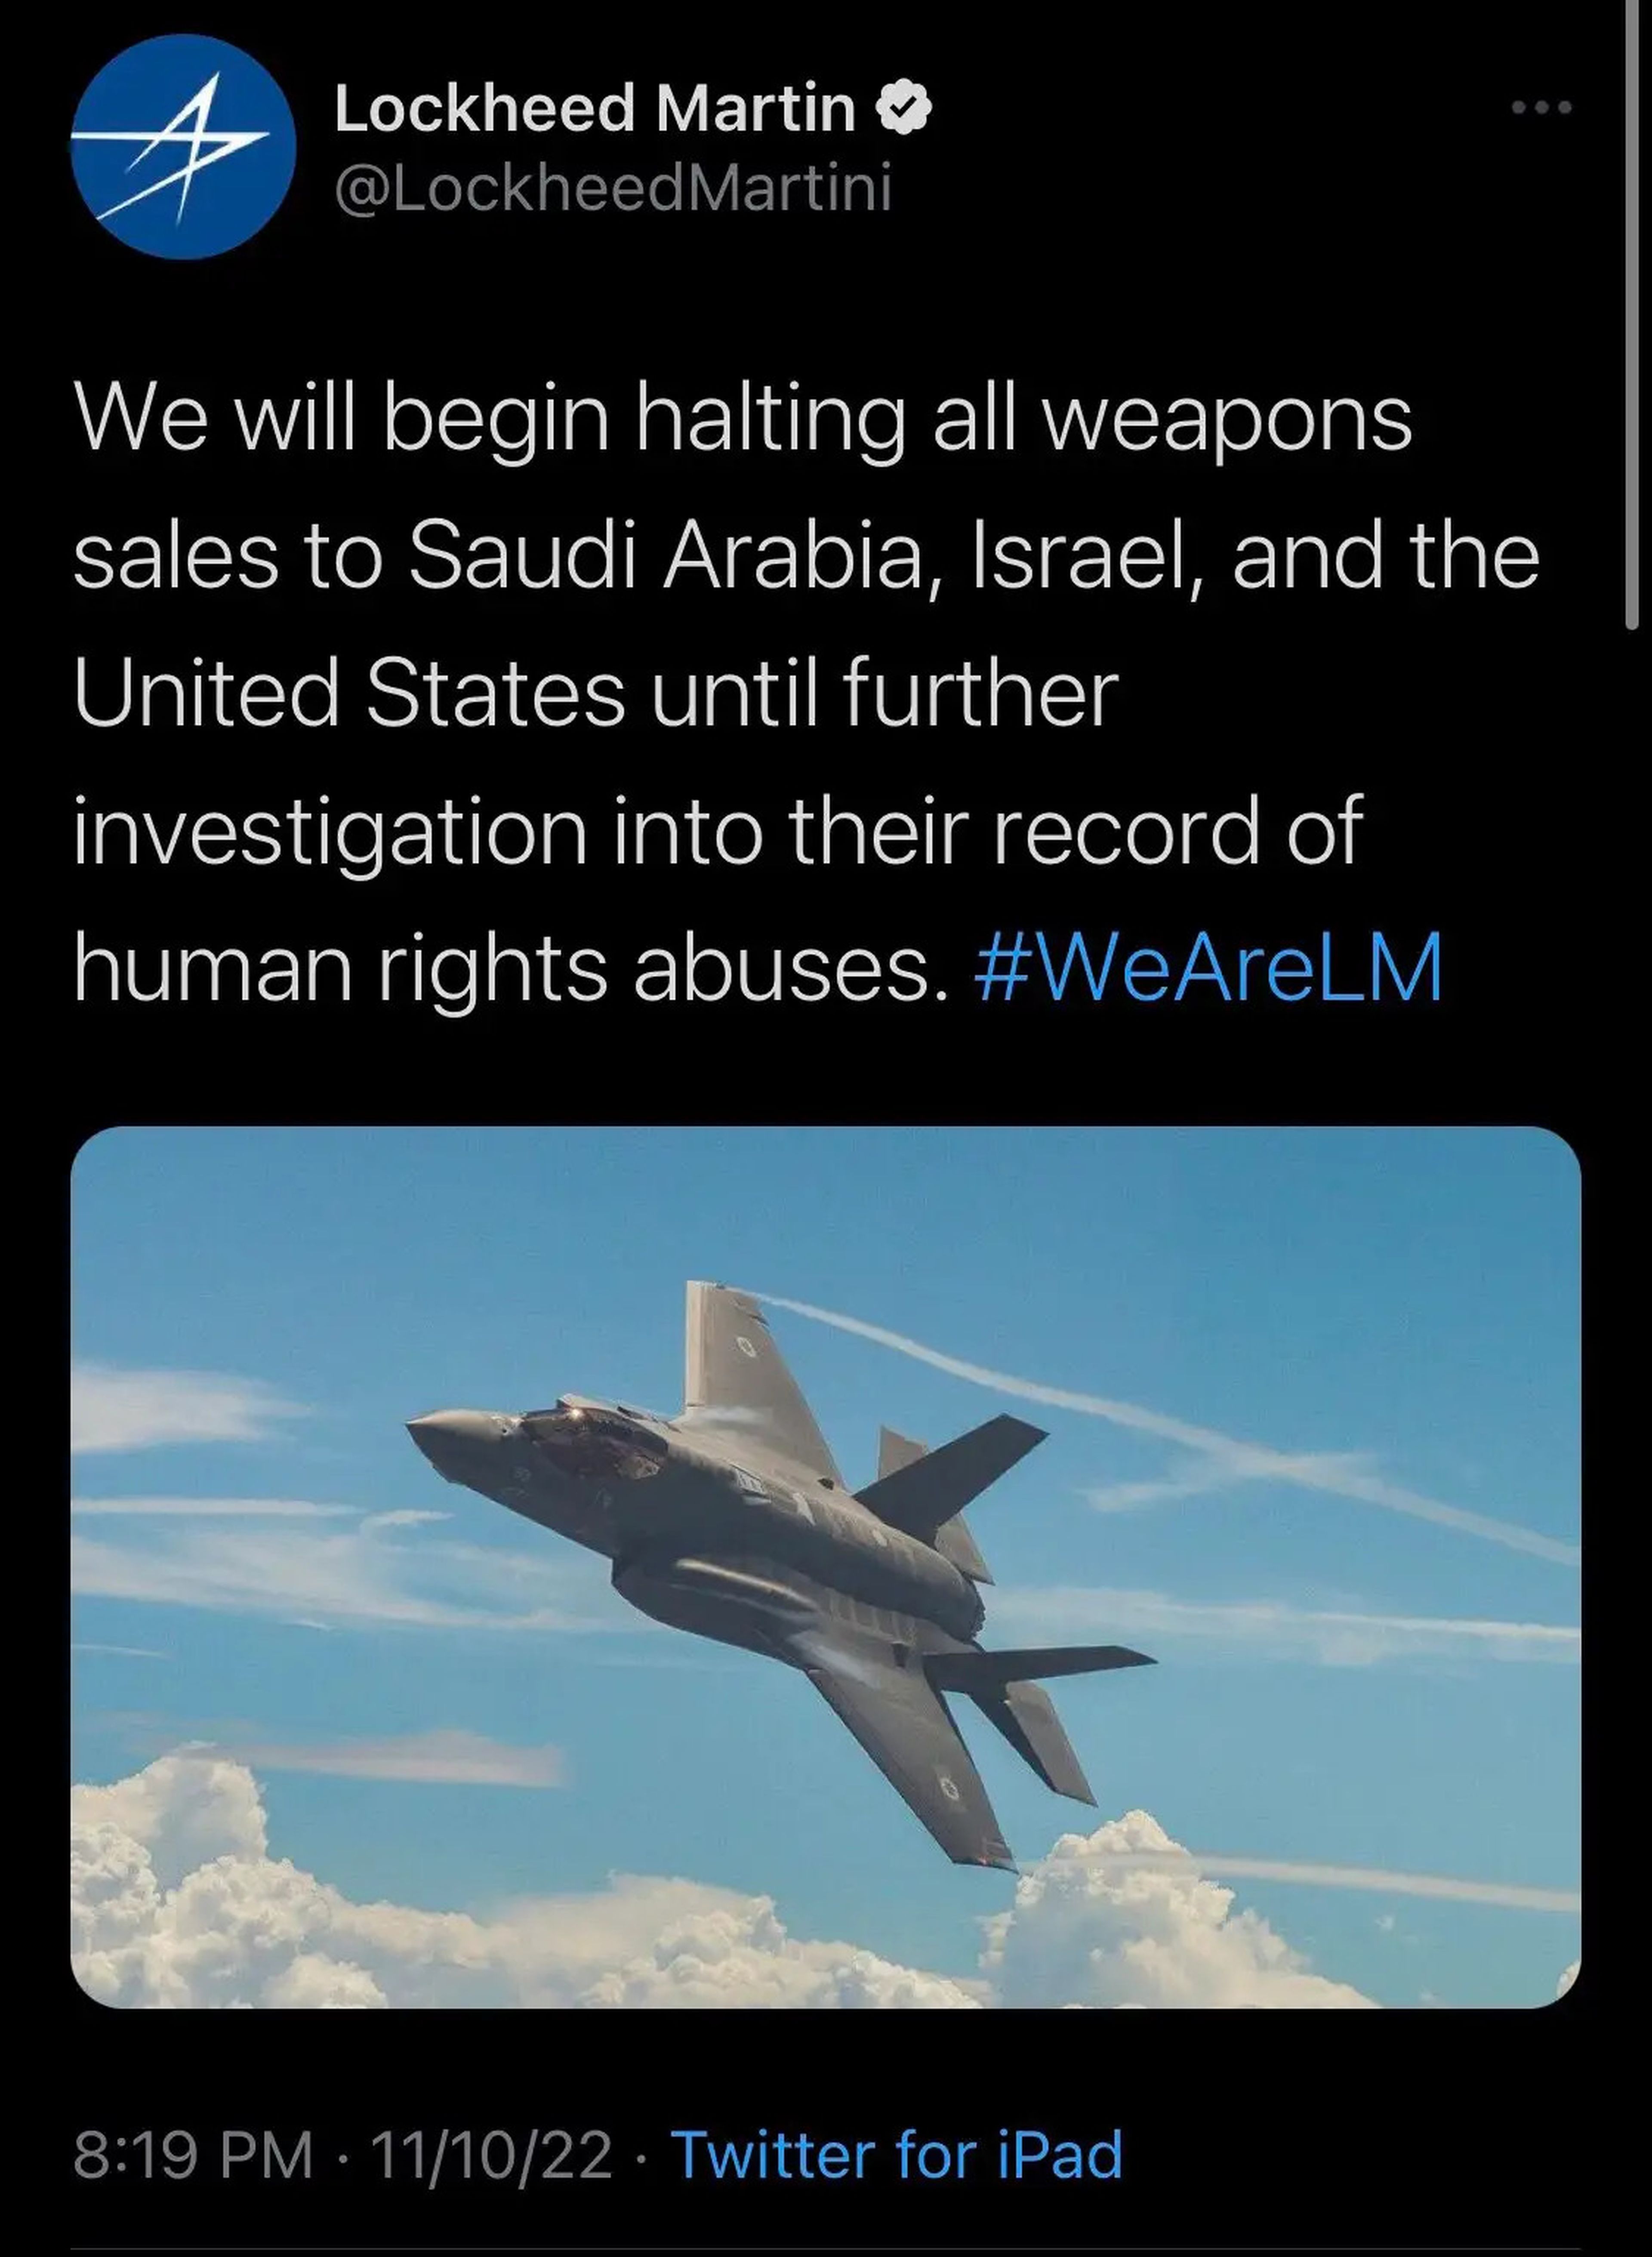 Tweet from account impersonating defense company Lockheed Martin.